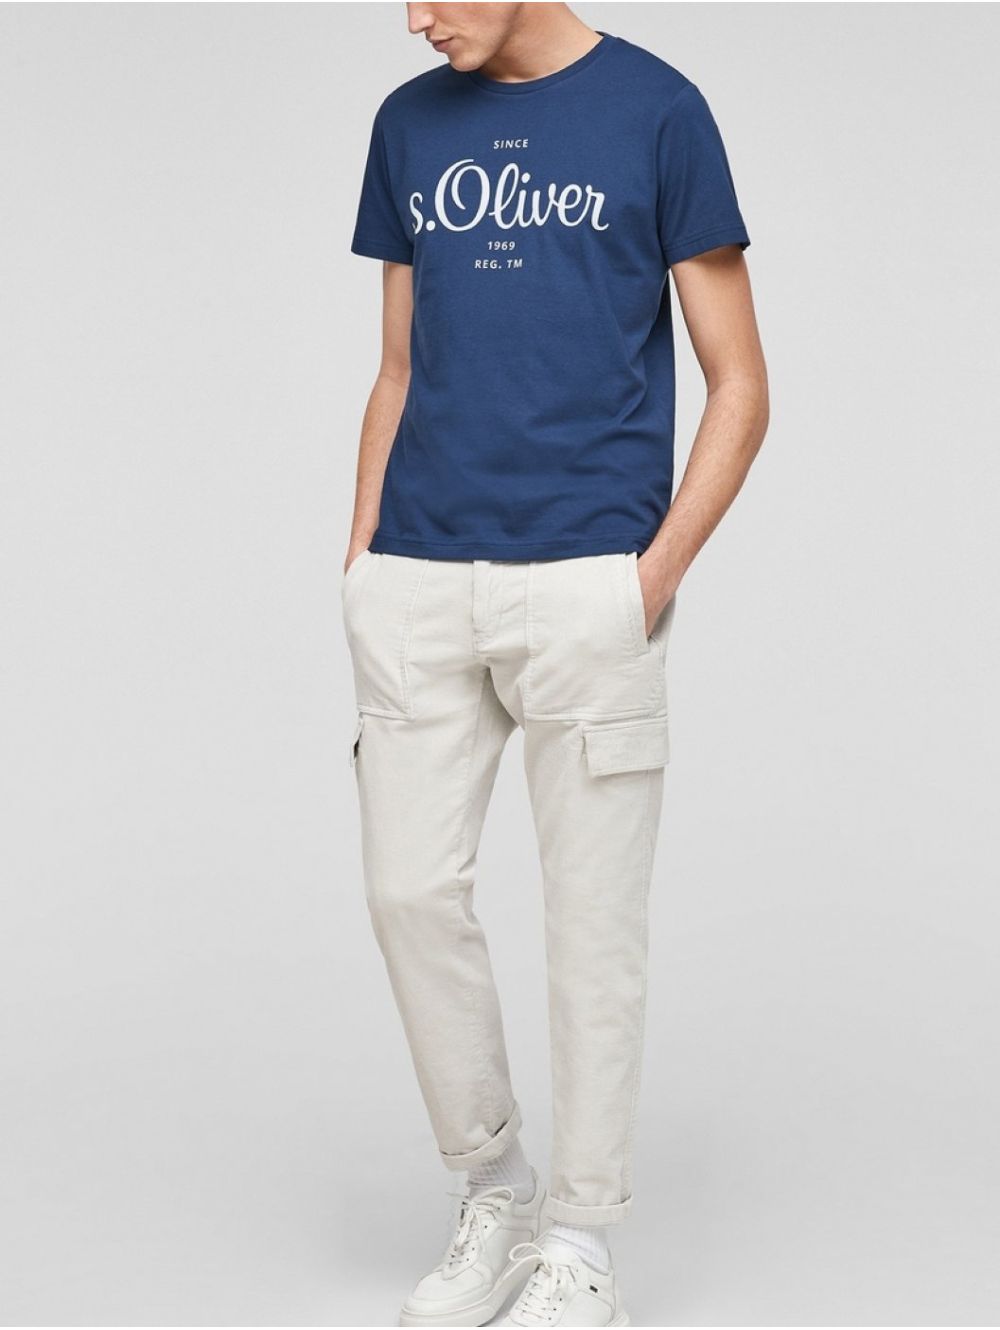 S.OLIVER Men\'s blue T-Shirt jersey Ocean short-sleeved 2057432-5693 Blue